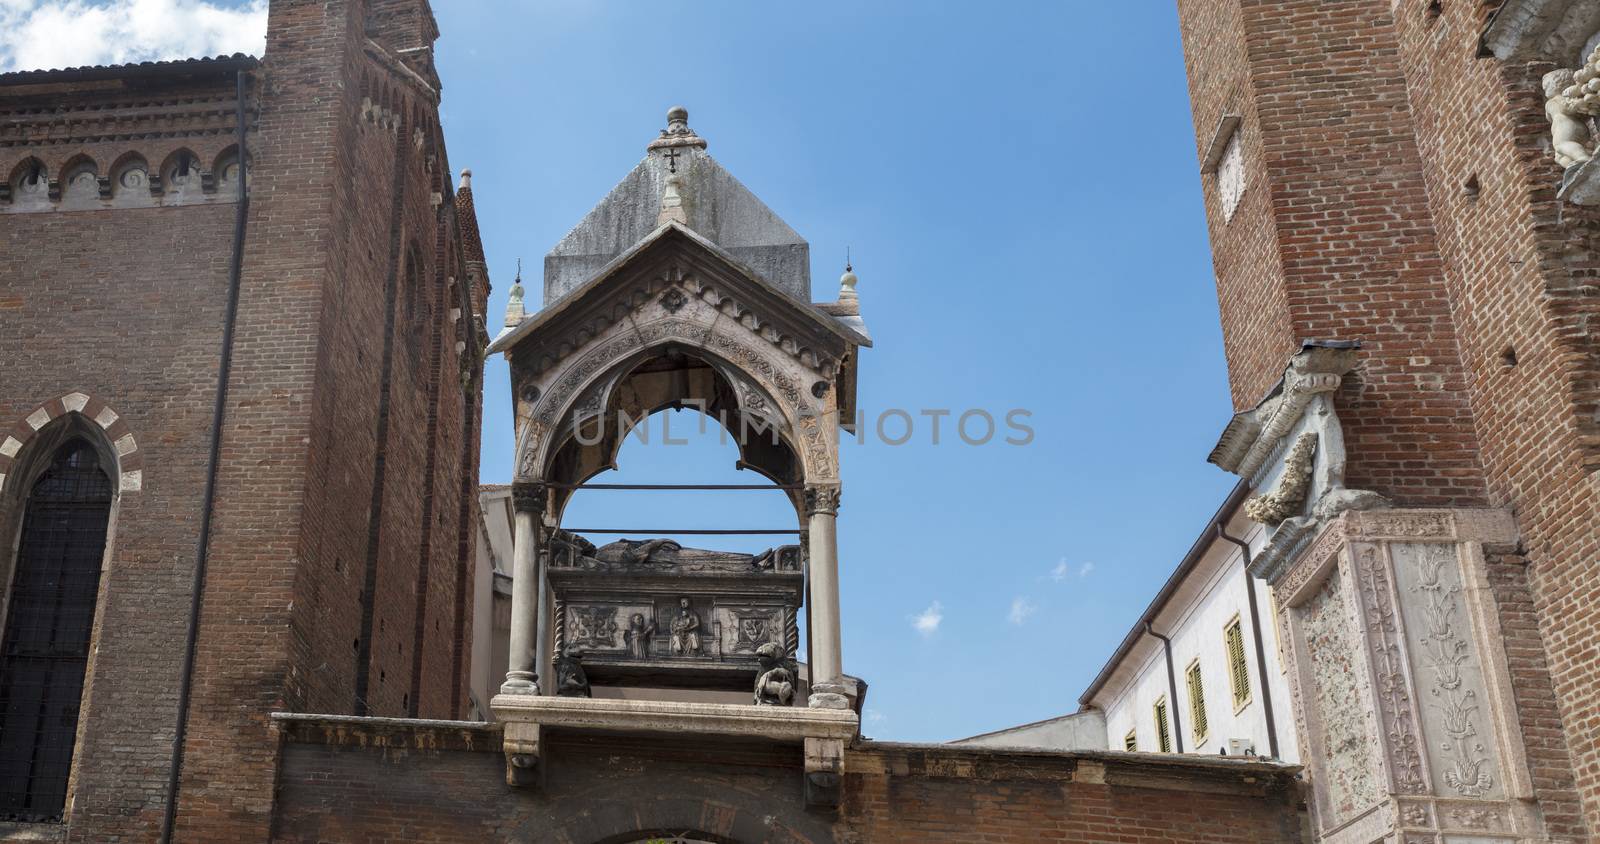 Verona, Italy, Europe, August 2019, A view of the Chiesa di Santa Anastasia church